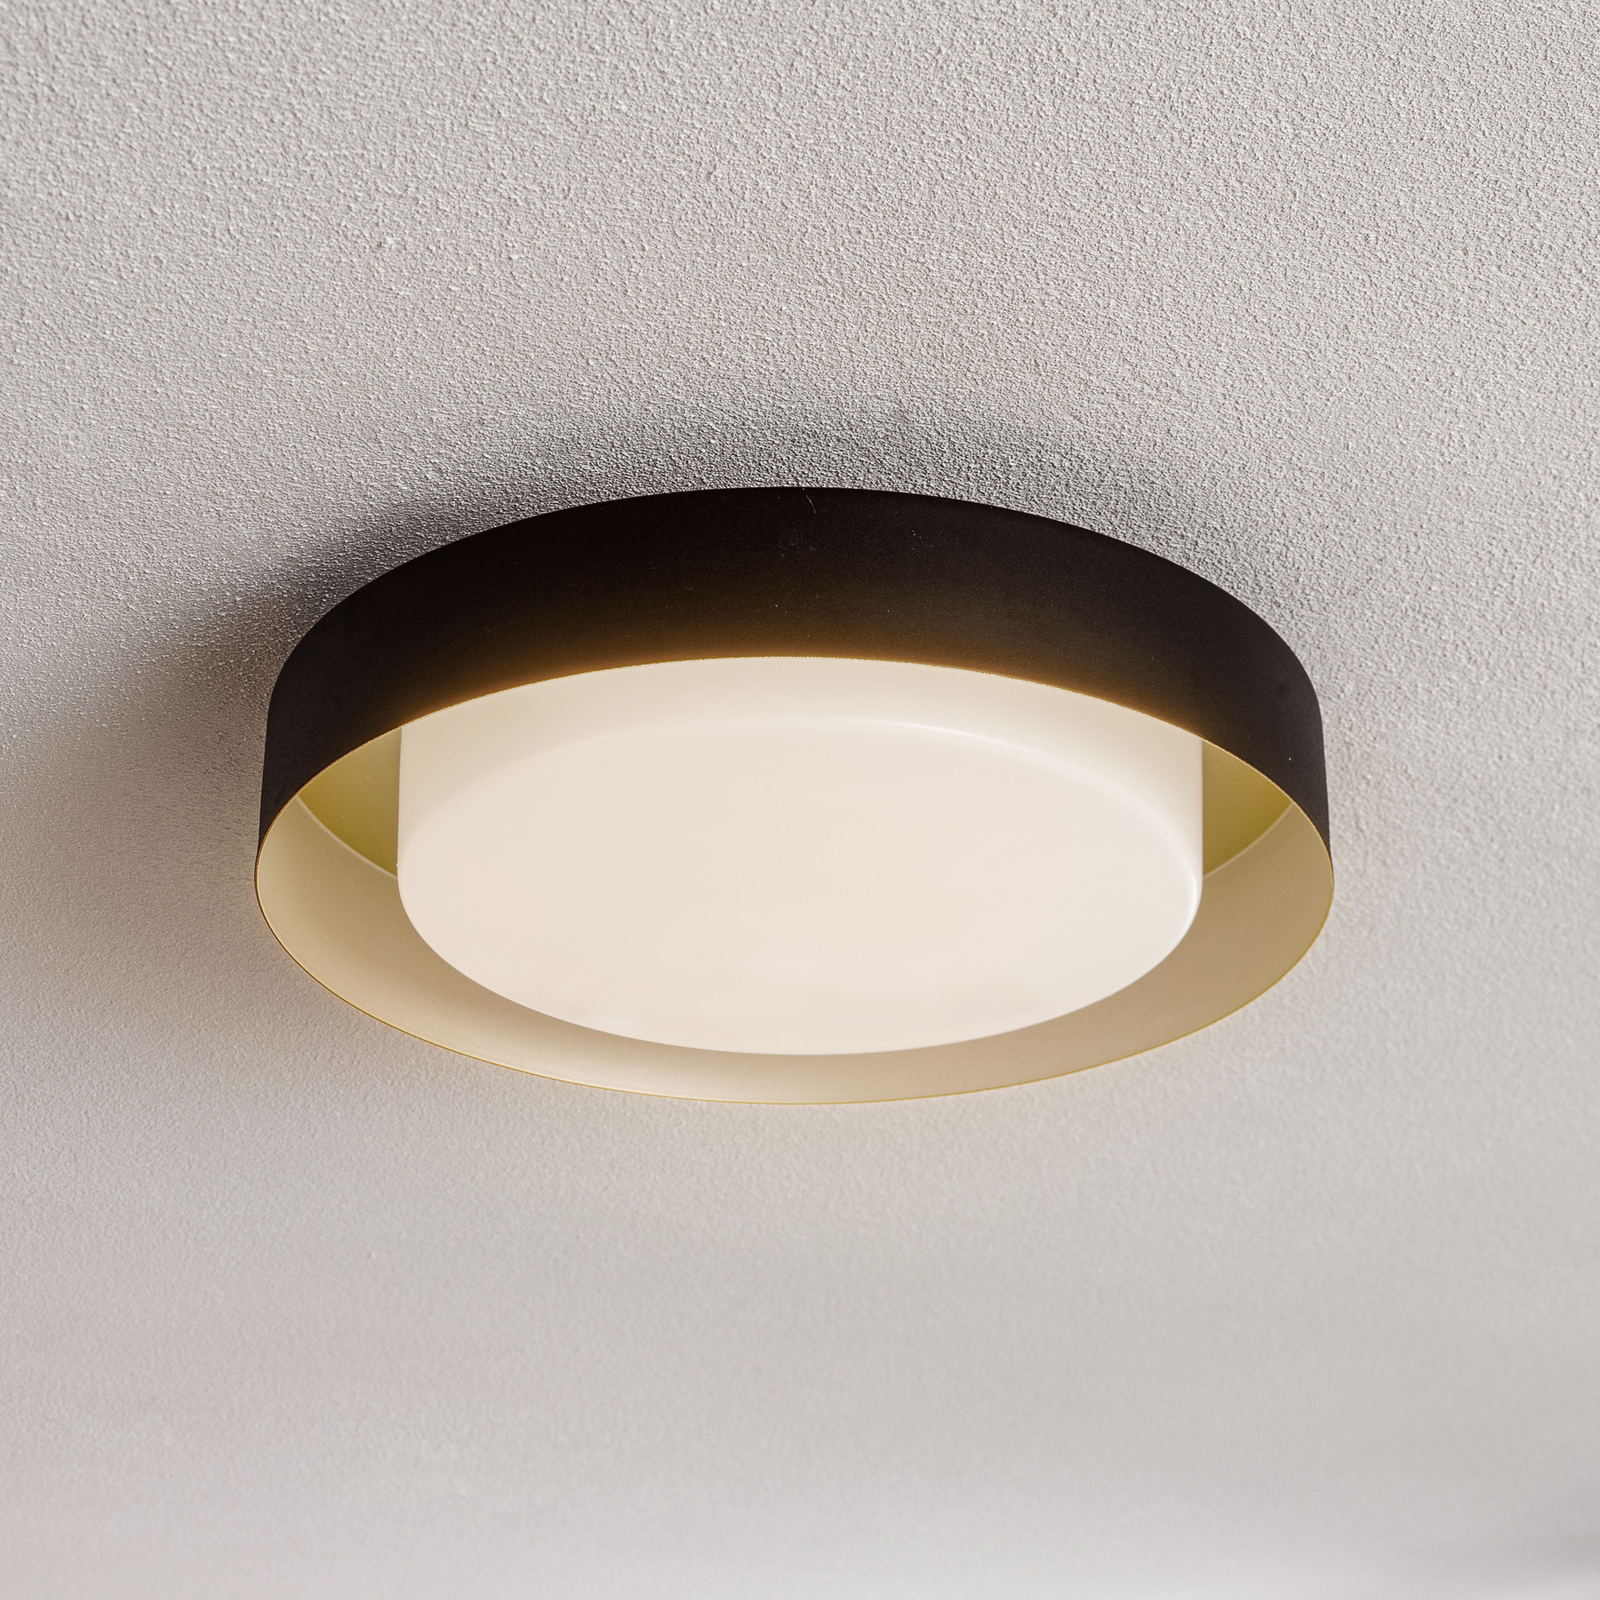 Arcchio Damaria LED ceiling lamp, black and gold